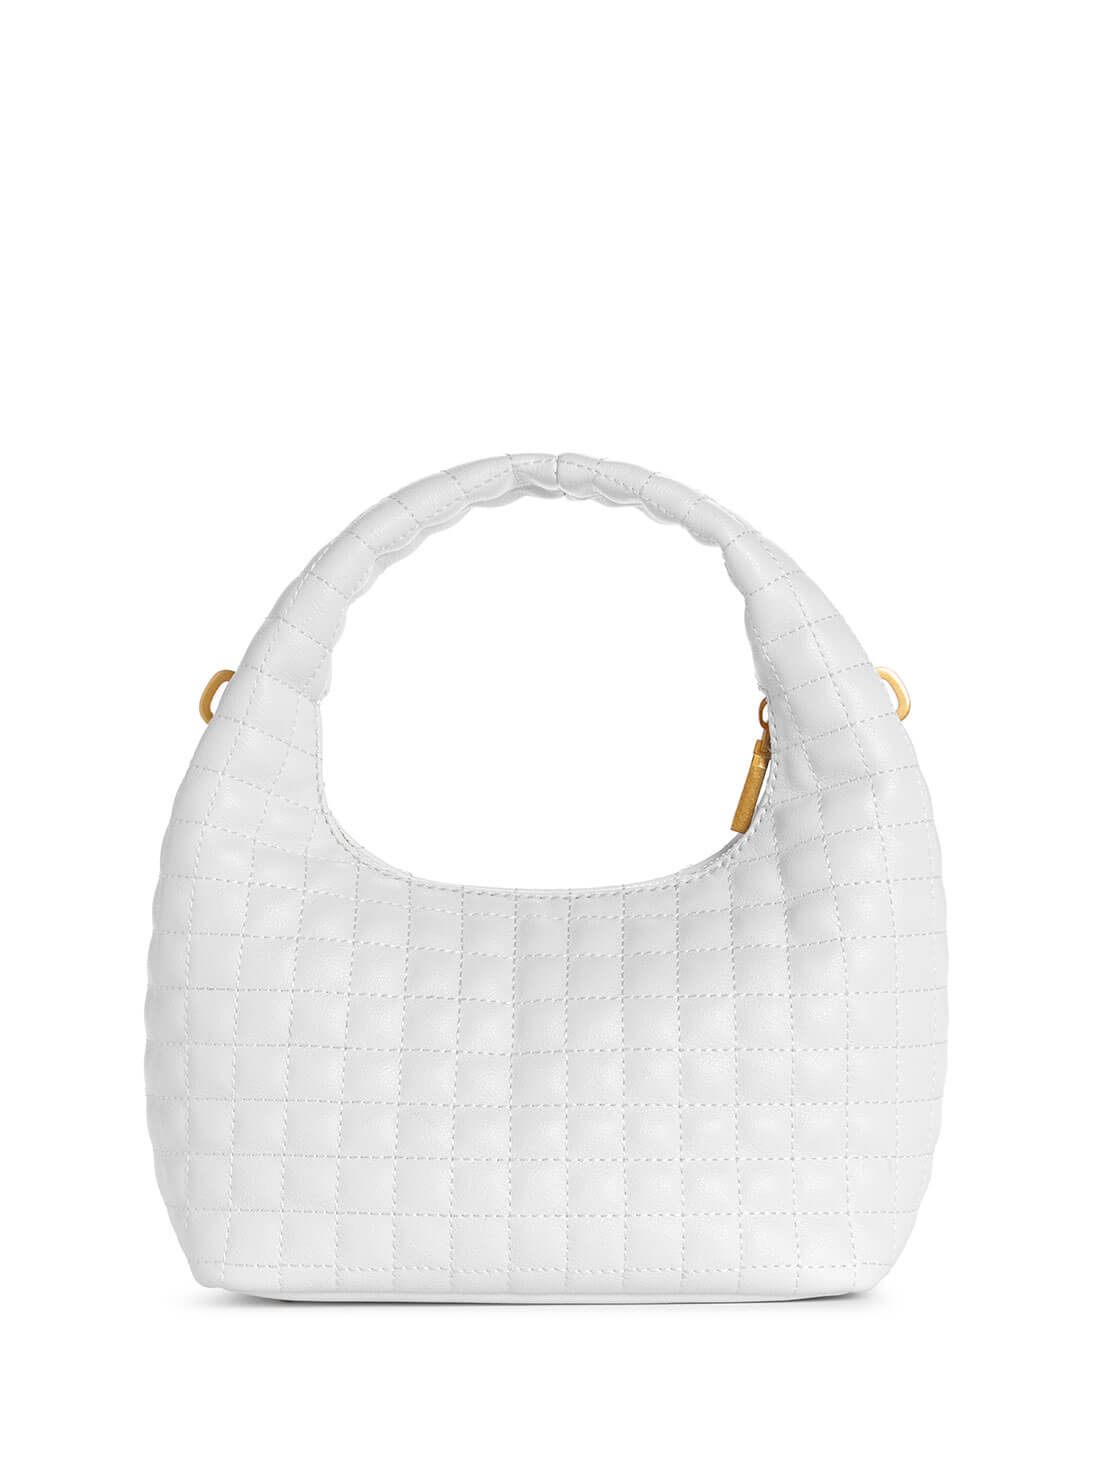 Women's White Tia Shoulder Bag back view